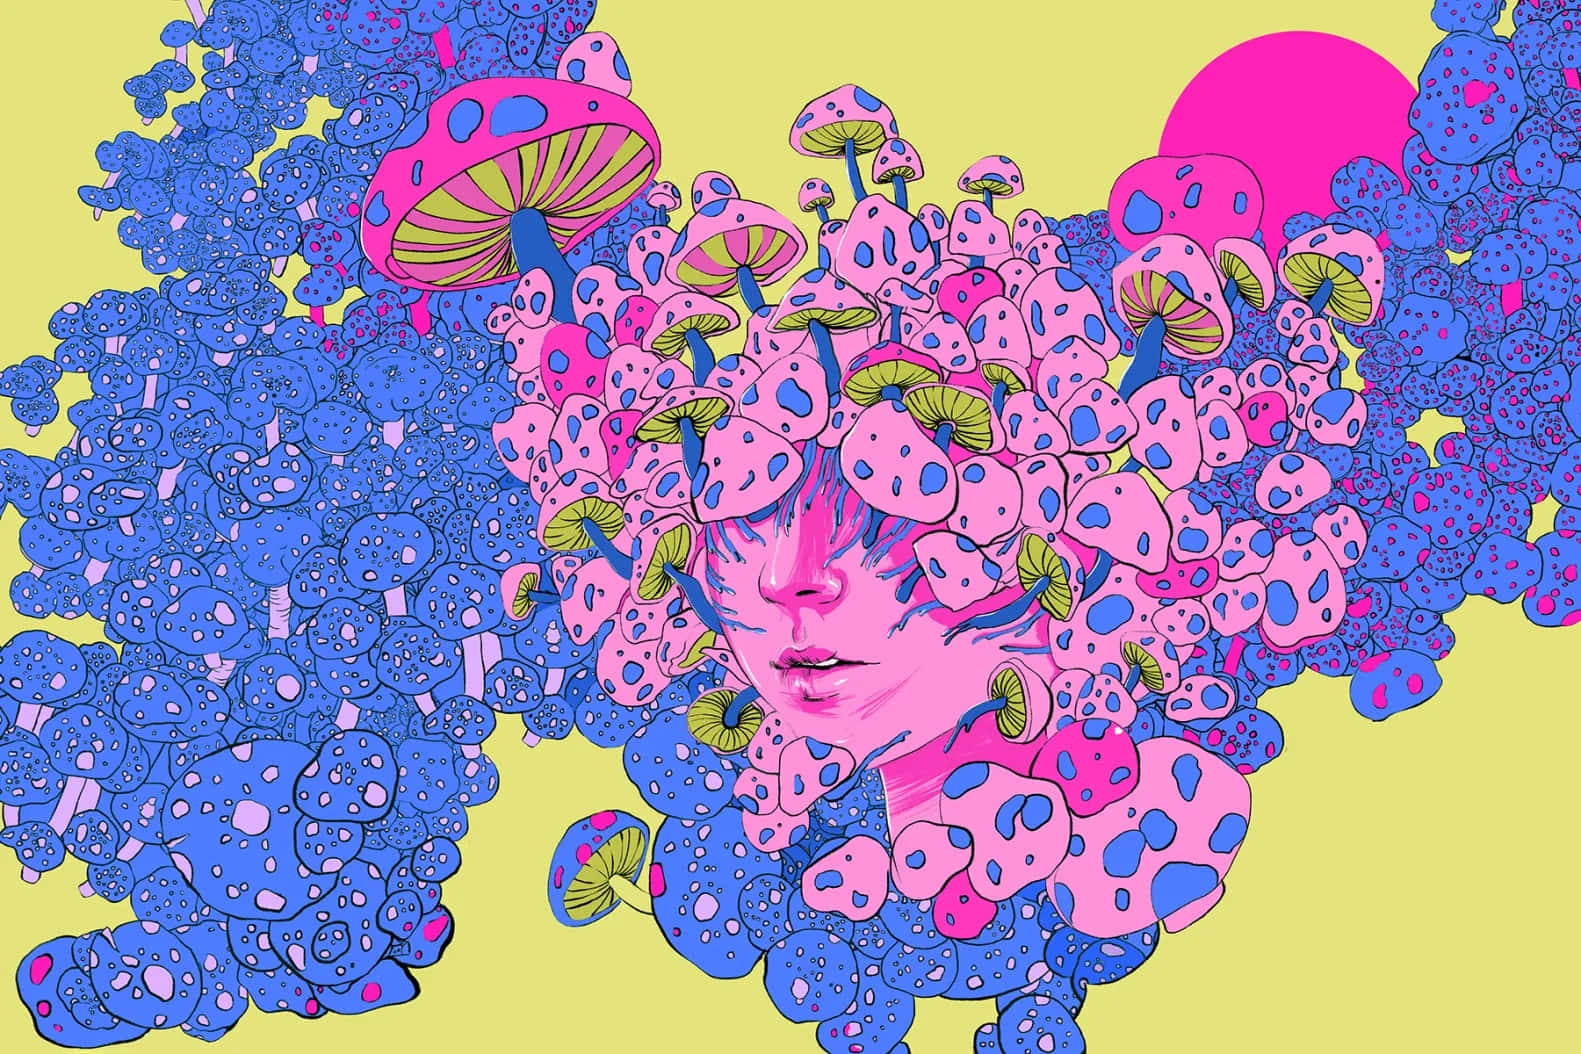 Psychedelic Mushroom Dreamscape Art Wallpaper